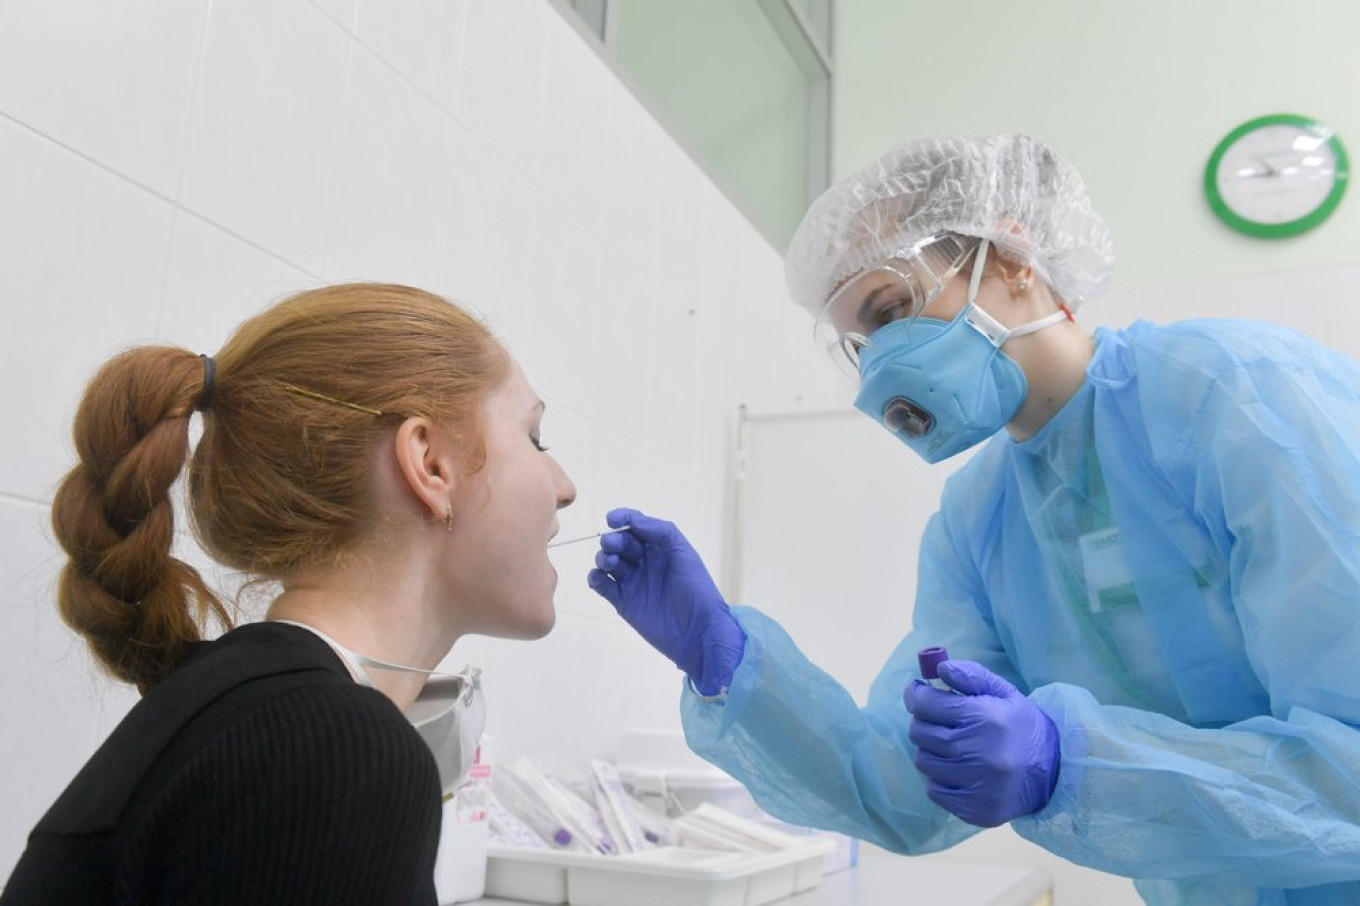 Moscow Clinics Warned of Coronavirus Tests’ False Negatives – Kommersant